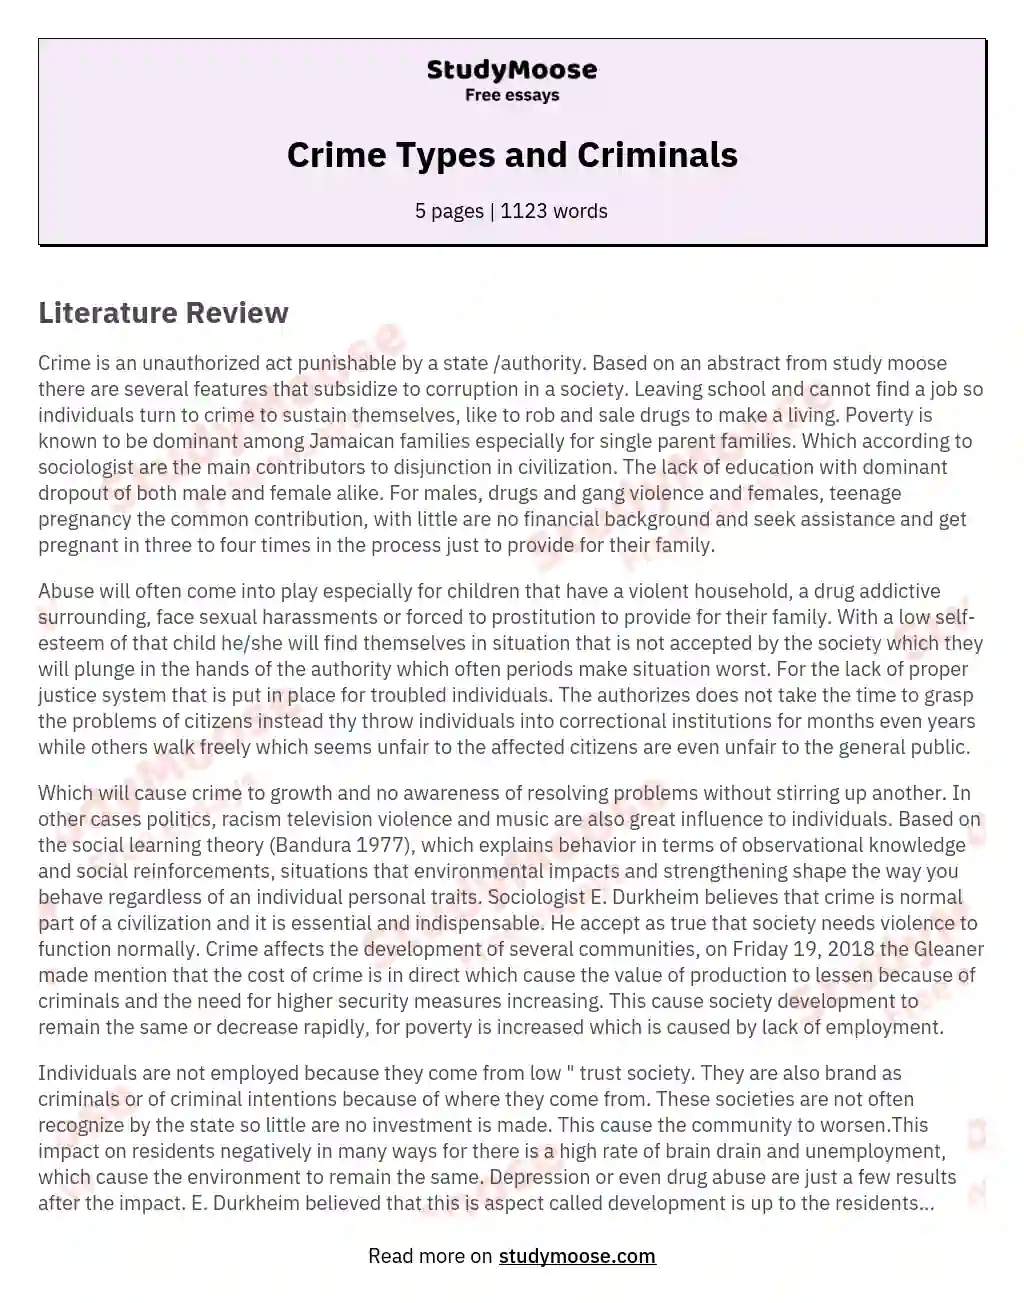 Crime Types and Criminals essay